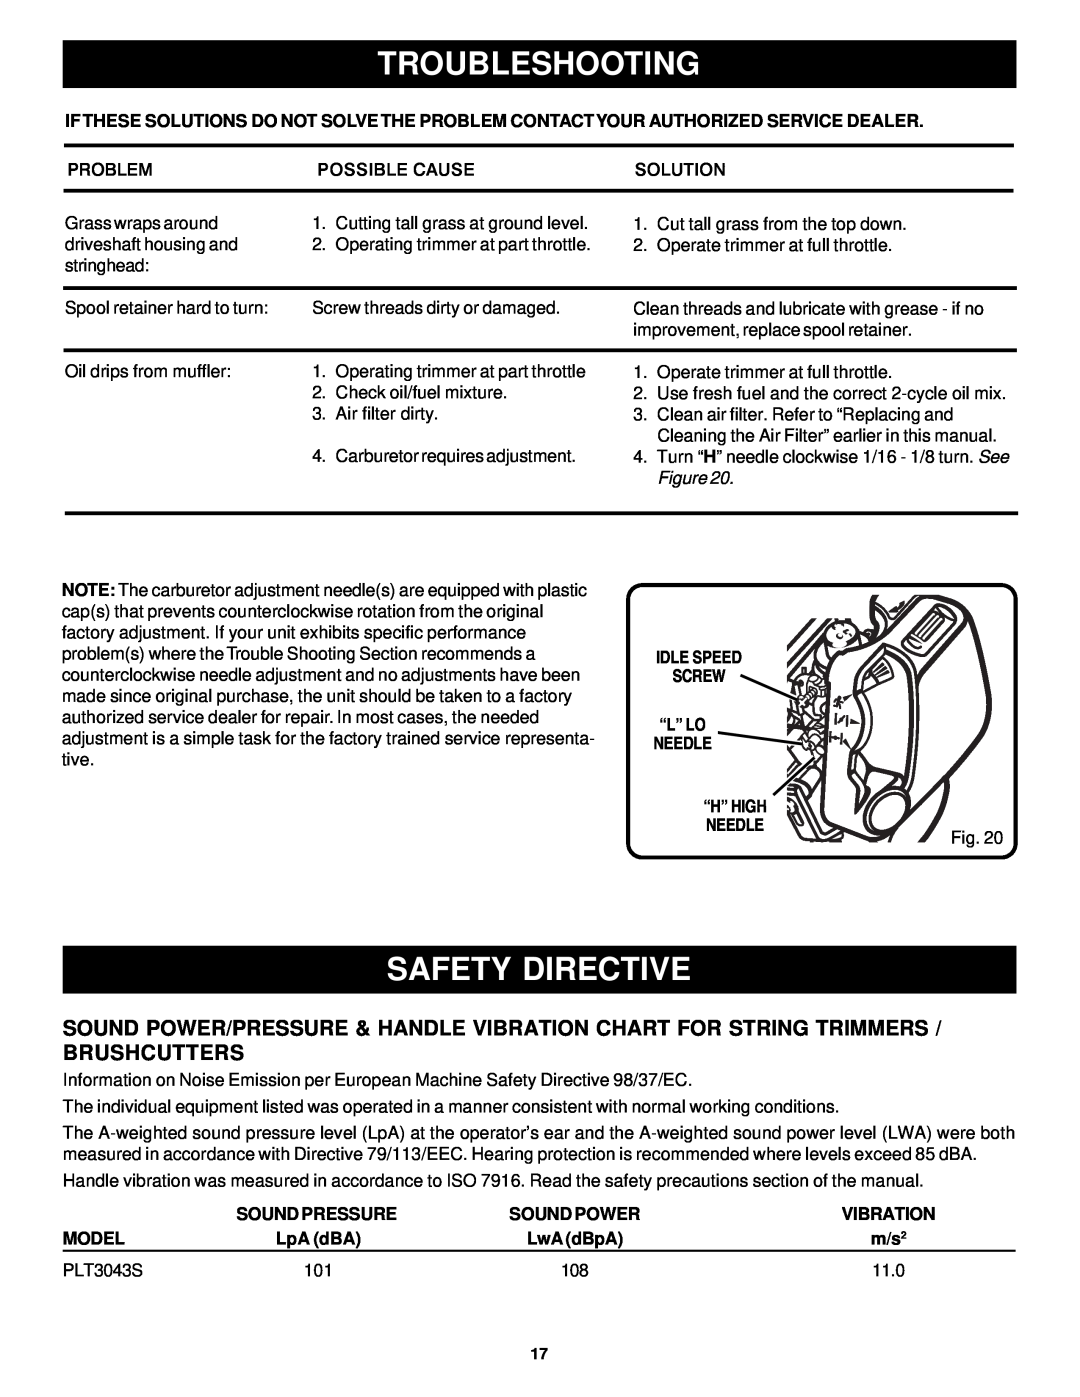 Ryobi PLT3043S Safety Directive, Idle Speed Screw “L” Lo Needle, Sound Pressure, Sound Power, Vibration, Model, LpA dBA 